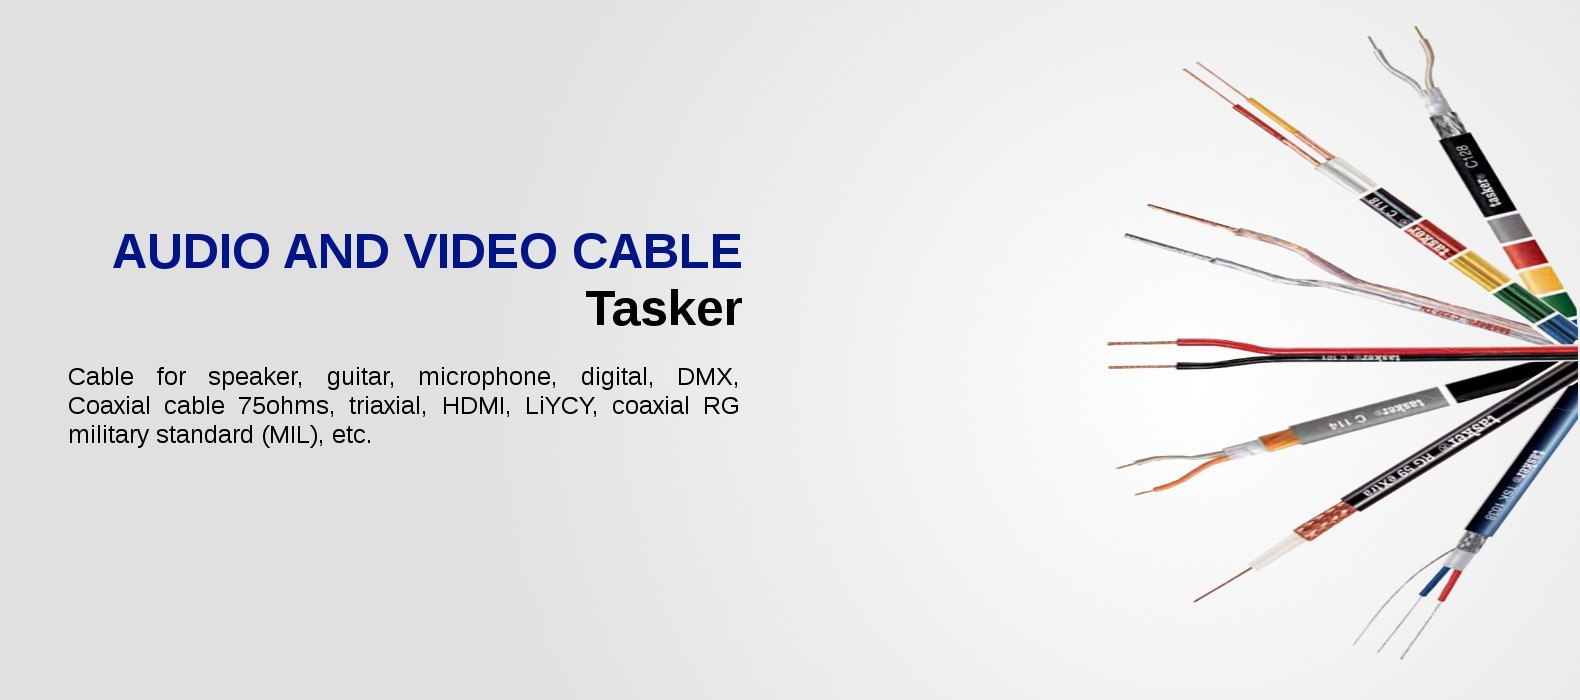 sl-cable-audio-video-microphone-dmx-speaker-tasker